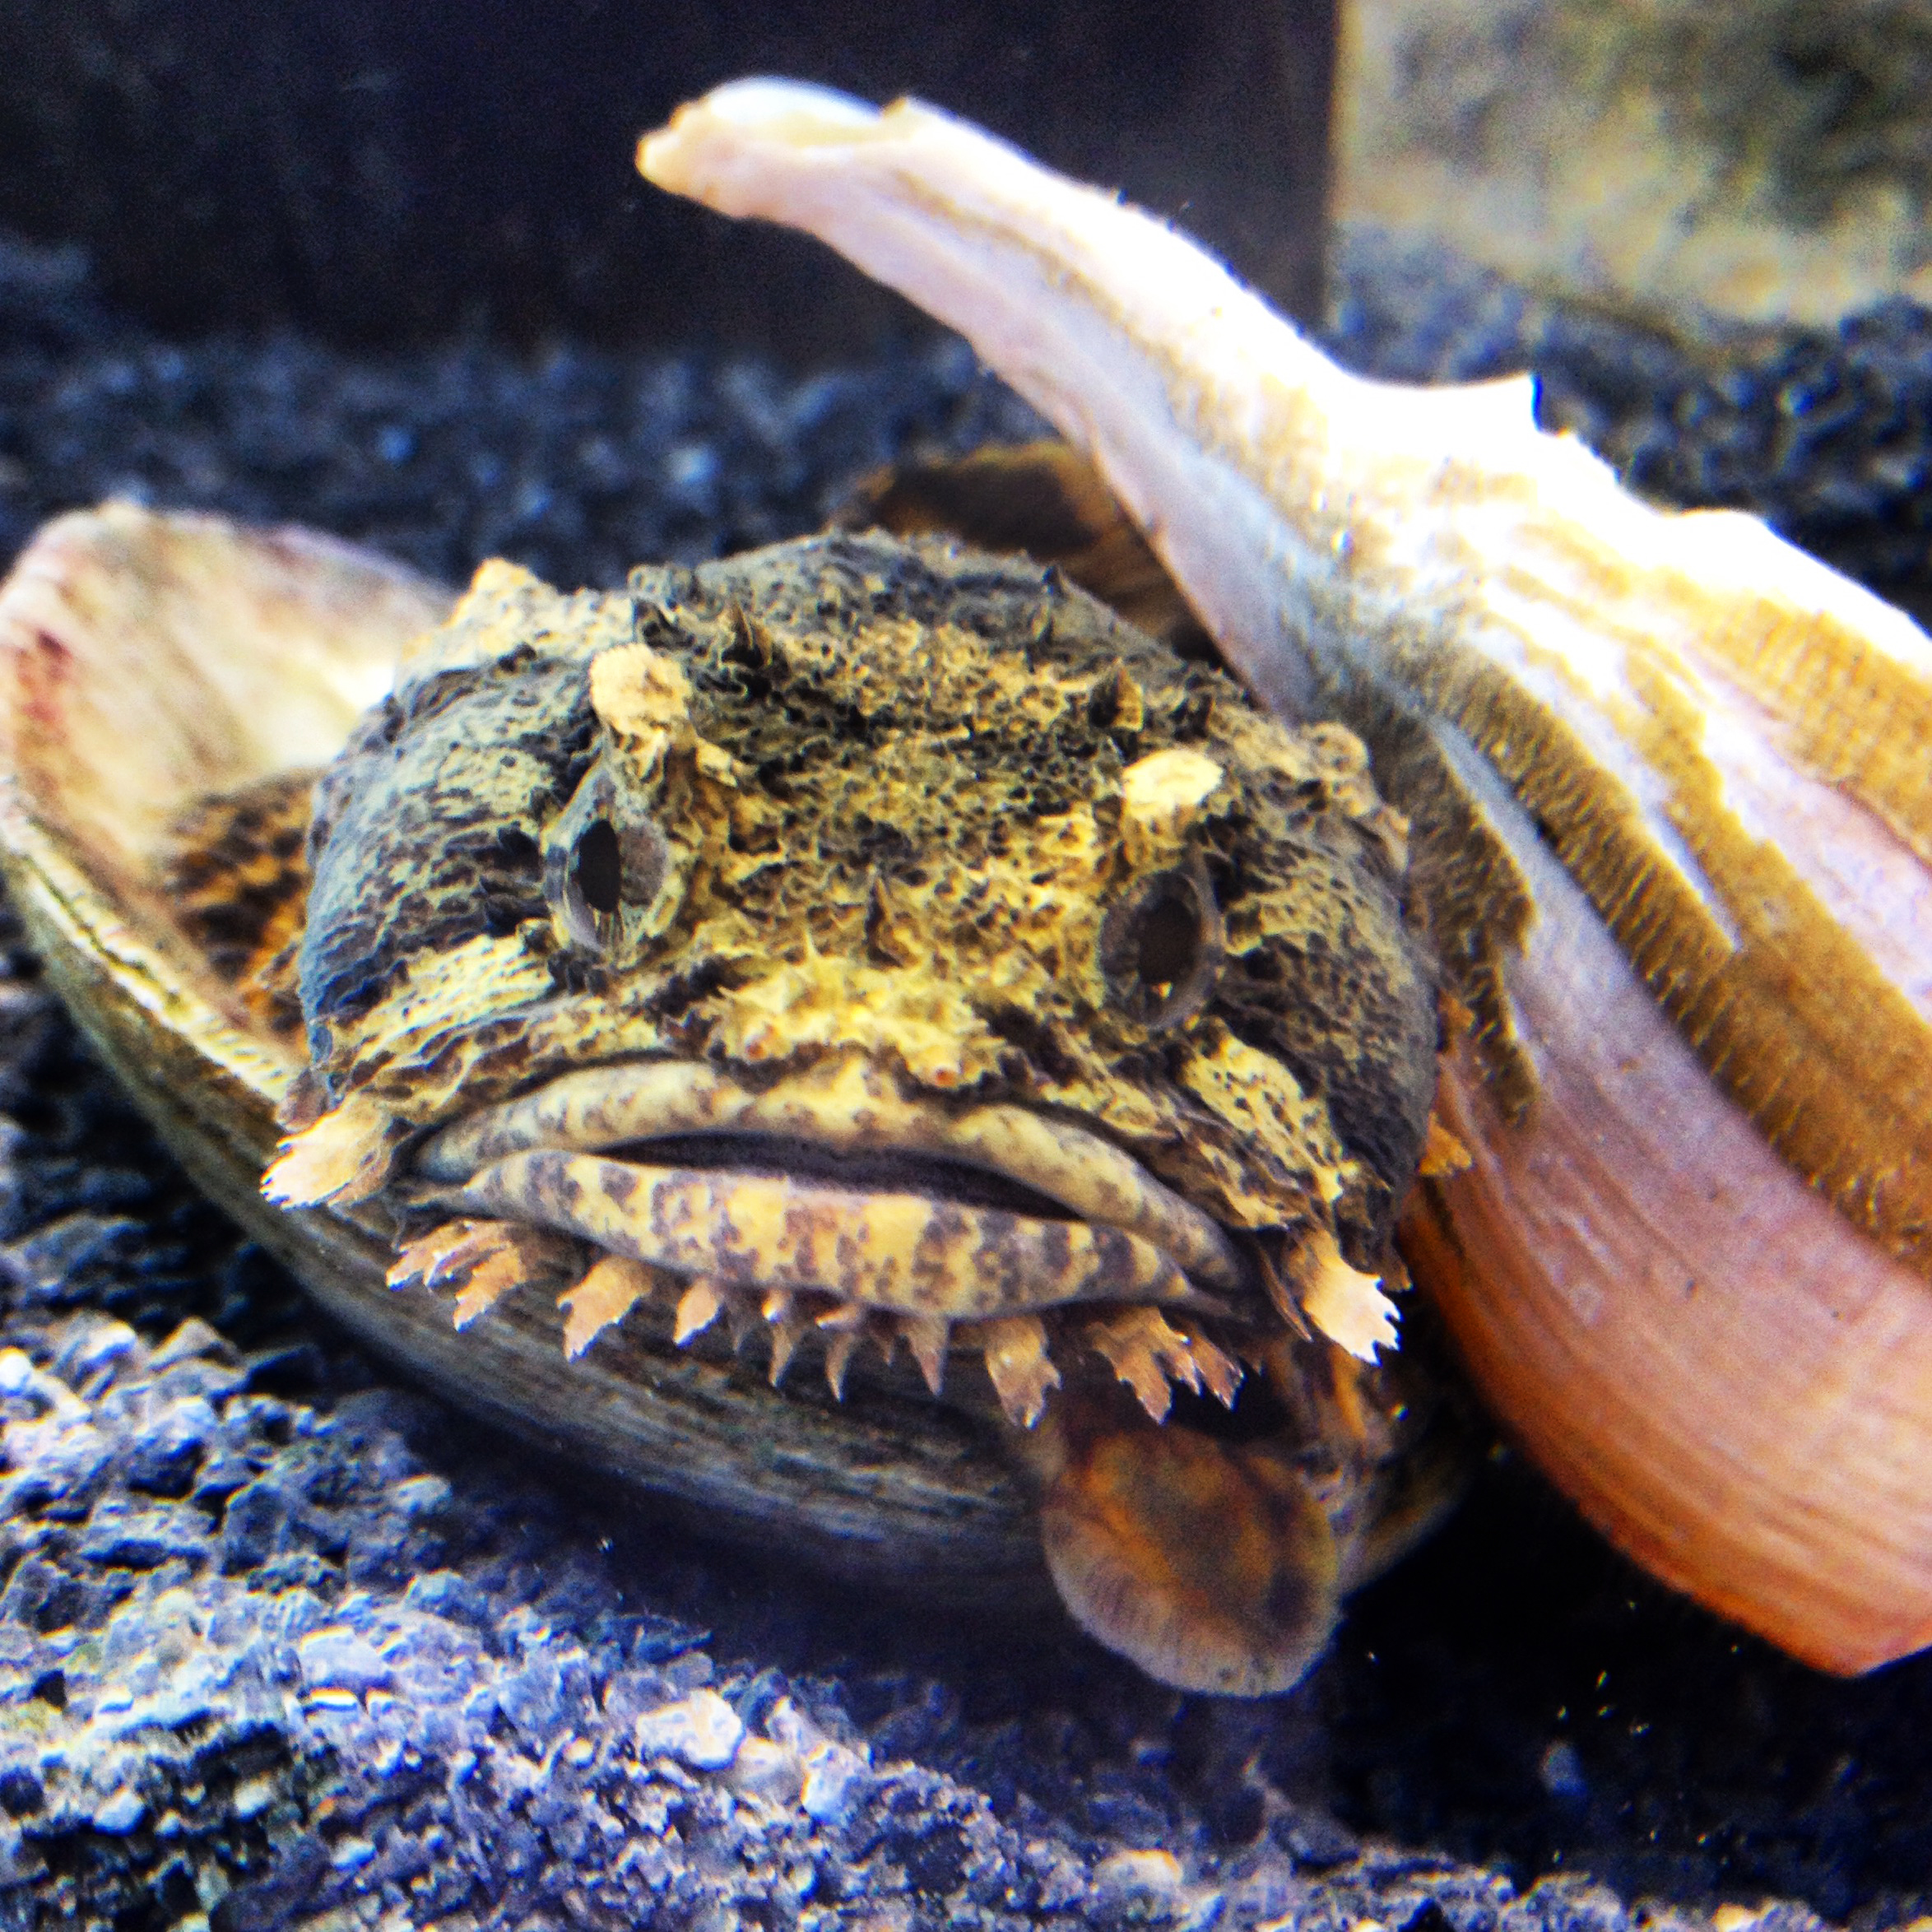 Brooklyn Bridge Park on X: Meet the Oyster Toadfish, a bottom